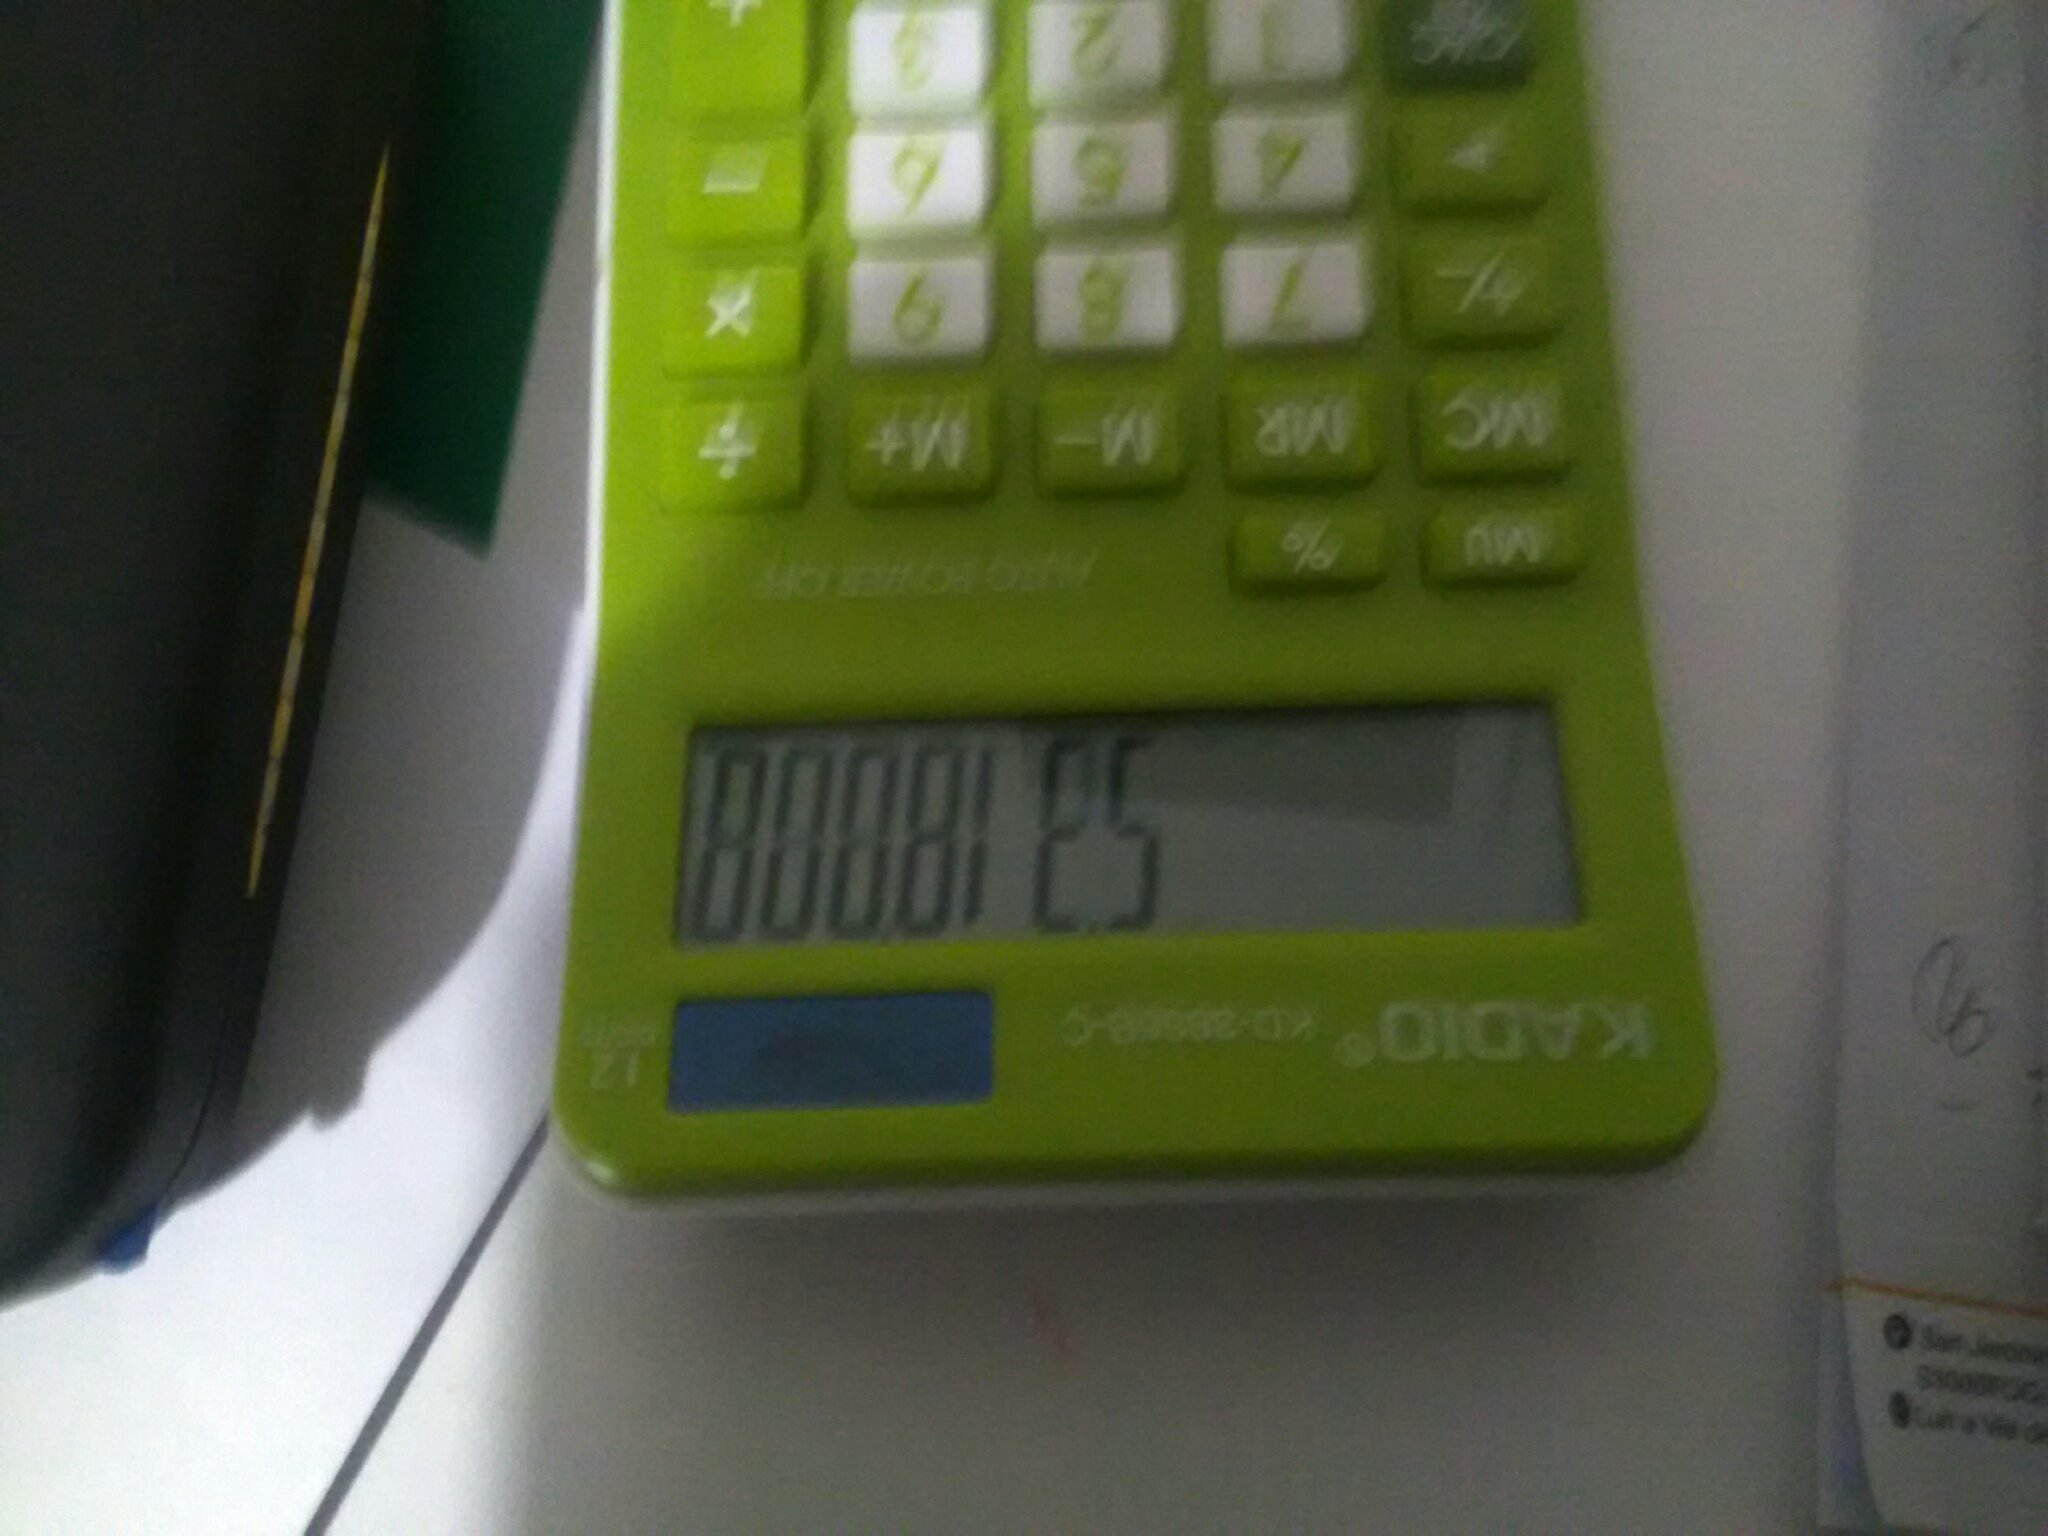 Si escriben 5.318.008 en la calculadora dice boobies (calidad latinoamericana) - meme